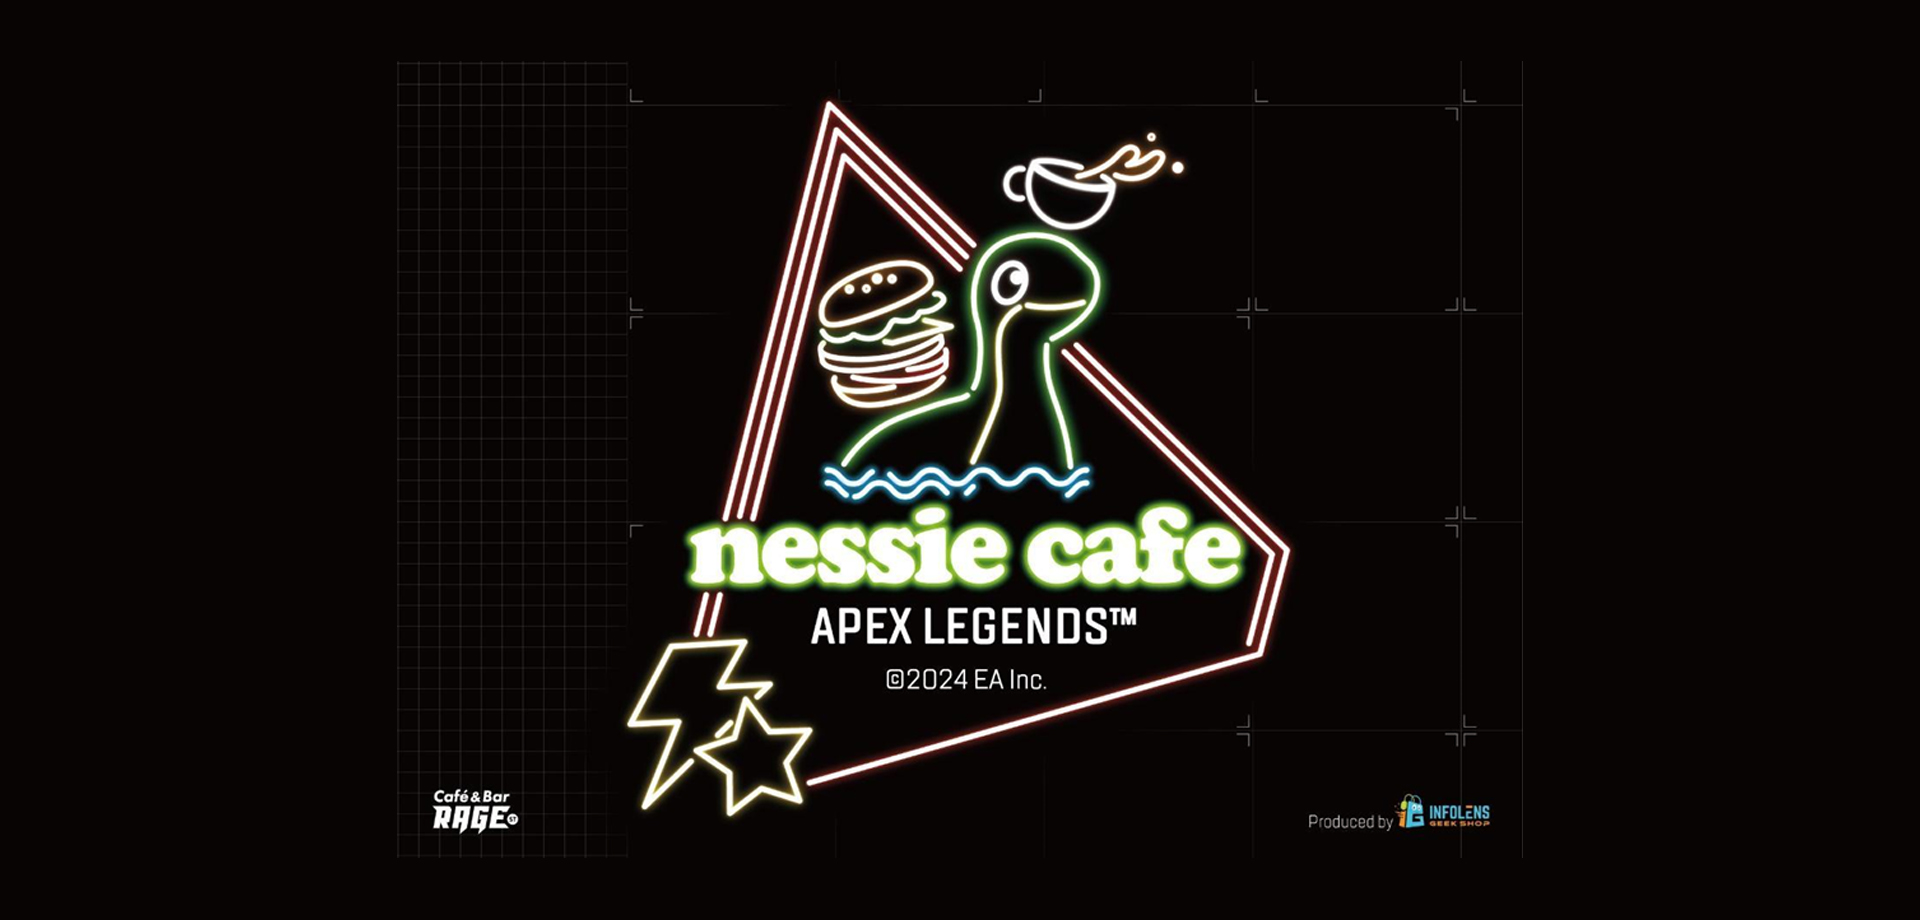 『Apex Legends™』のコラボカフェ「ネッシーカフェ」バナー